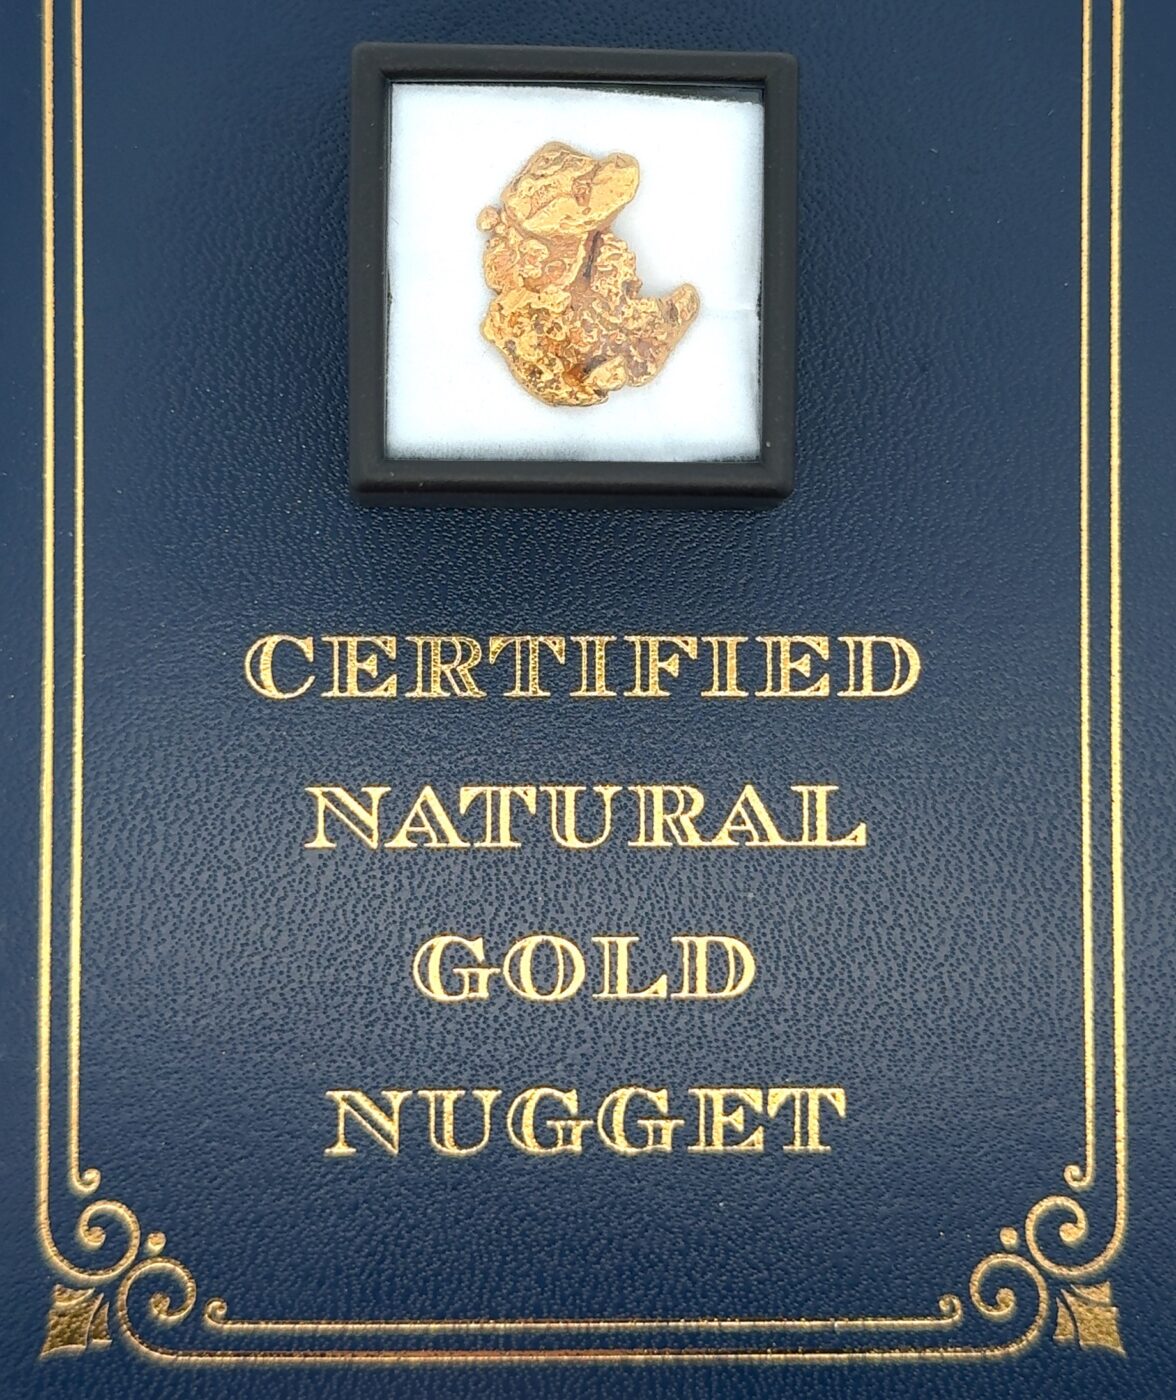 8.3 Gram Natural Gold Nugget from Moose Creek Alaska, Alaska Mint